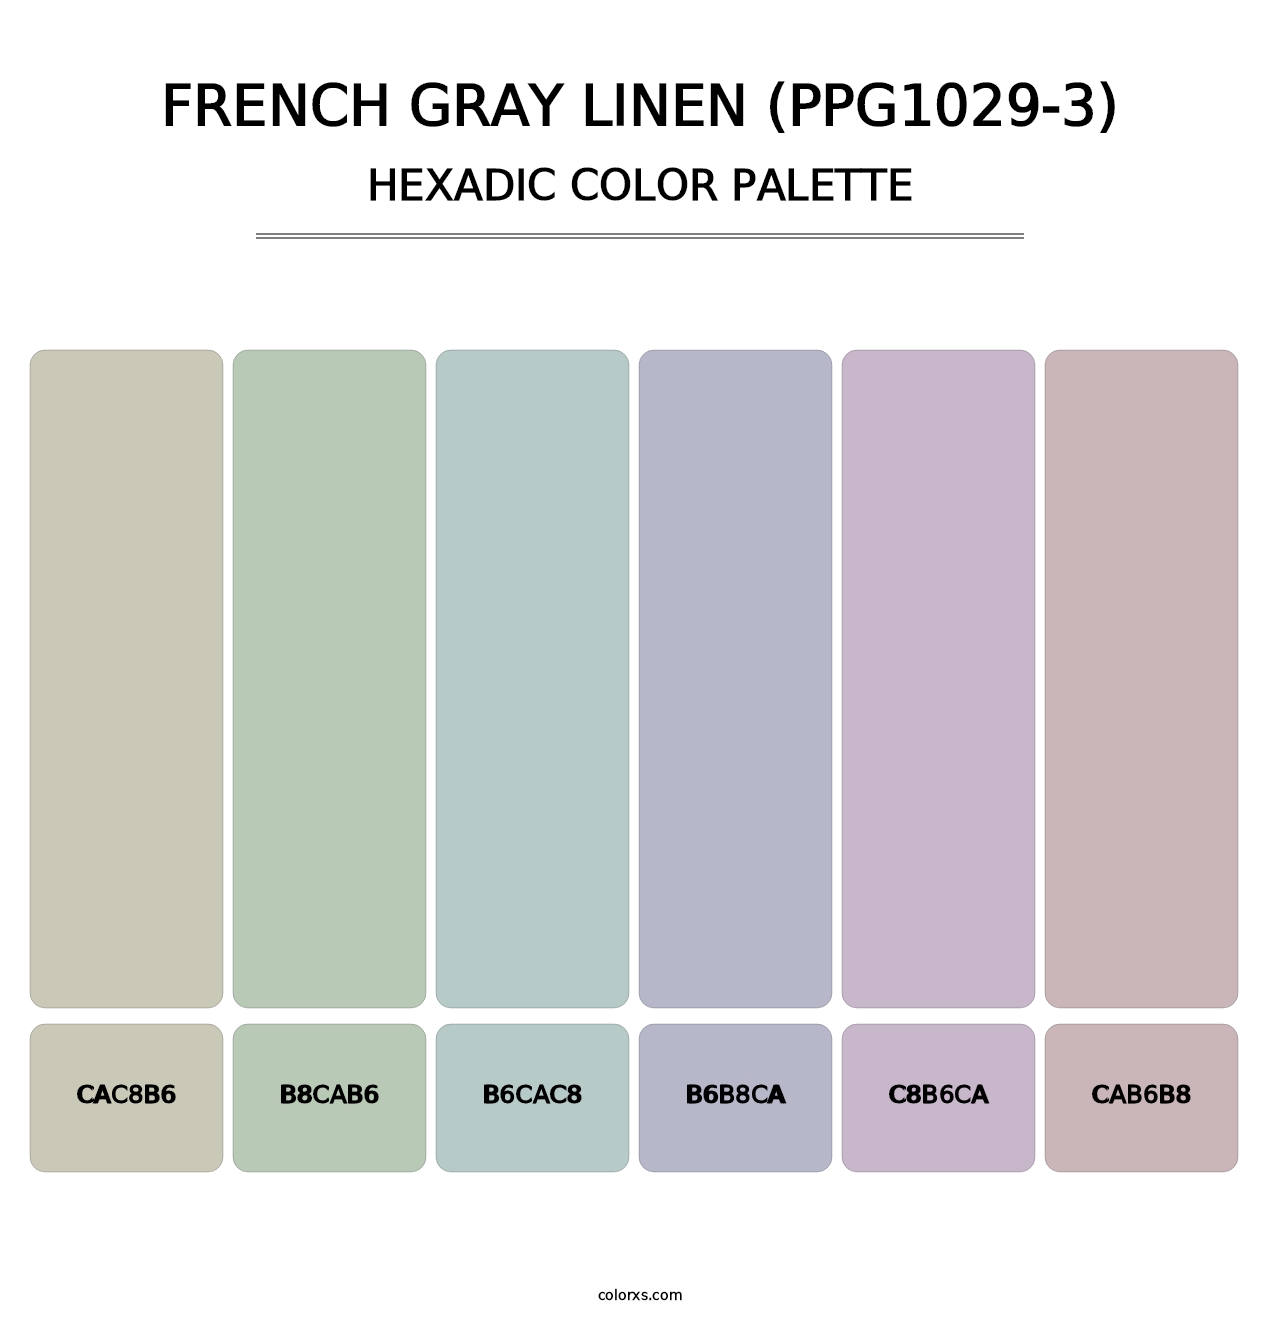 French Gray Linen (PPG1029-3) - Hexadic Color Palette